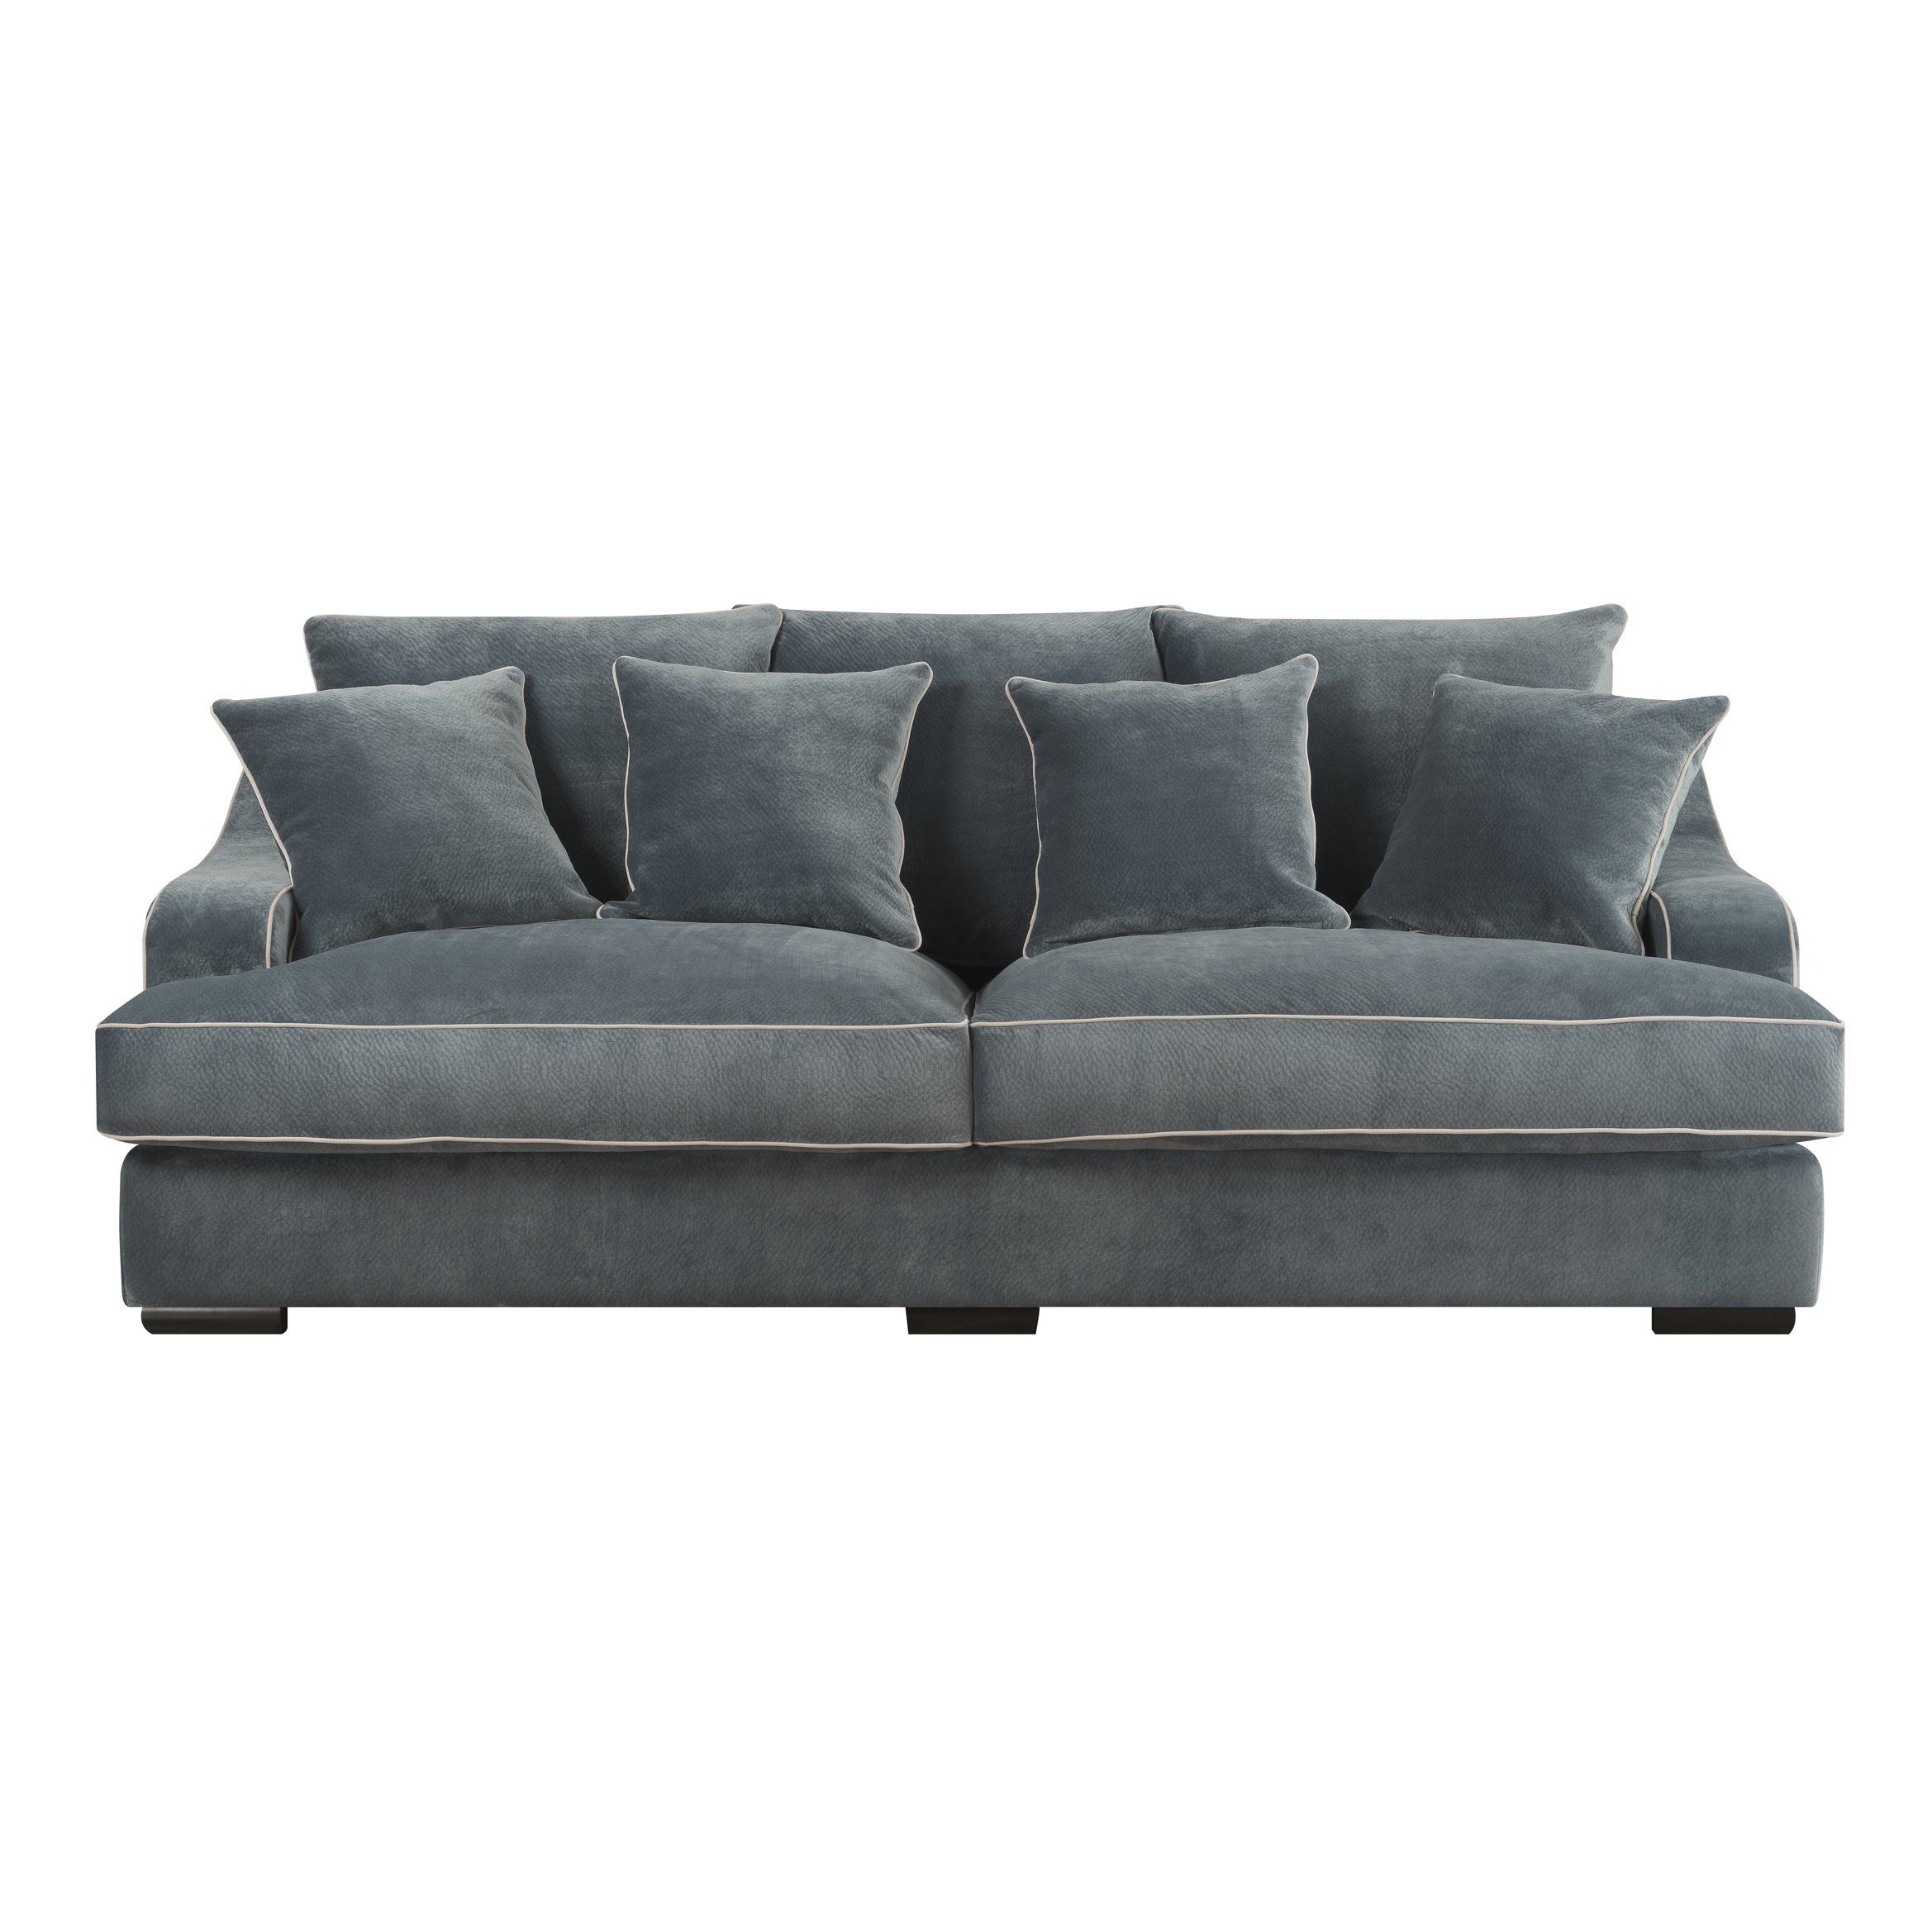 Shop Emerald Caresse Marine Blue Plush Oversized Sofa – Free Pertaining To Caressa Leather Dove Grey Sofa Chairs (View 14 of 25)